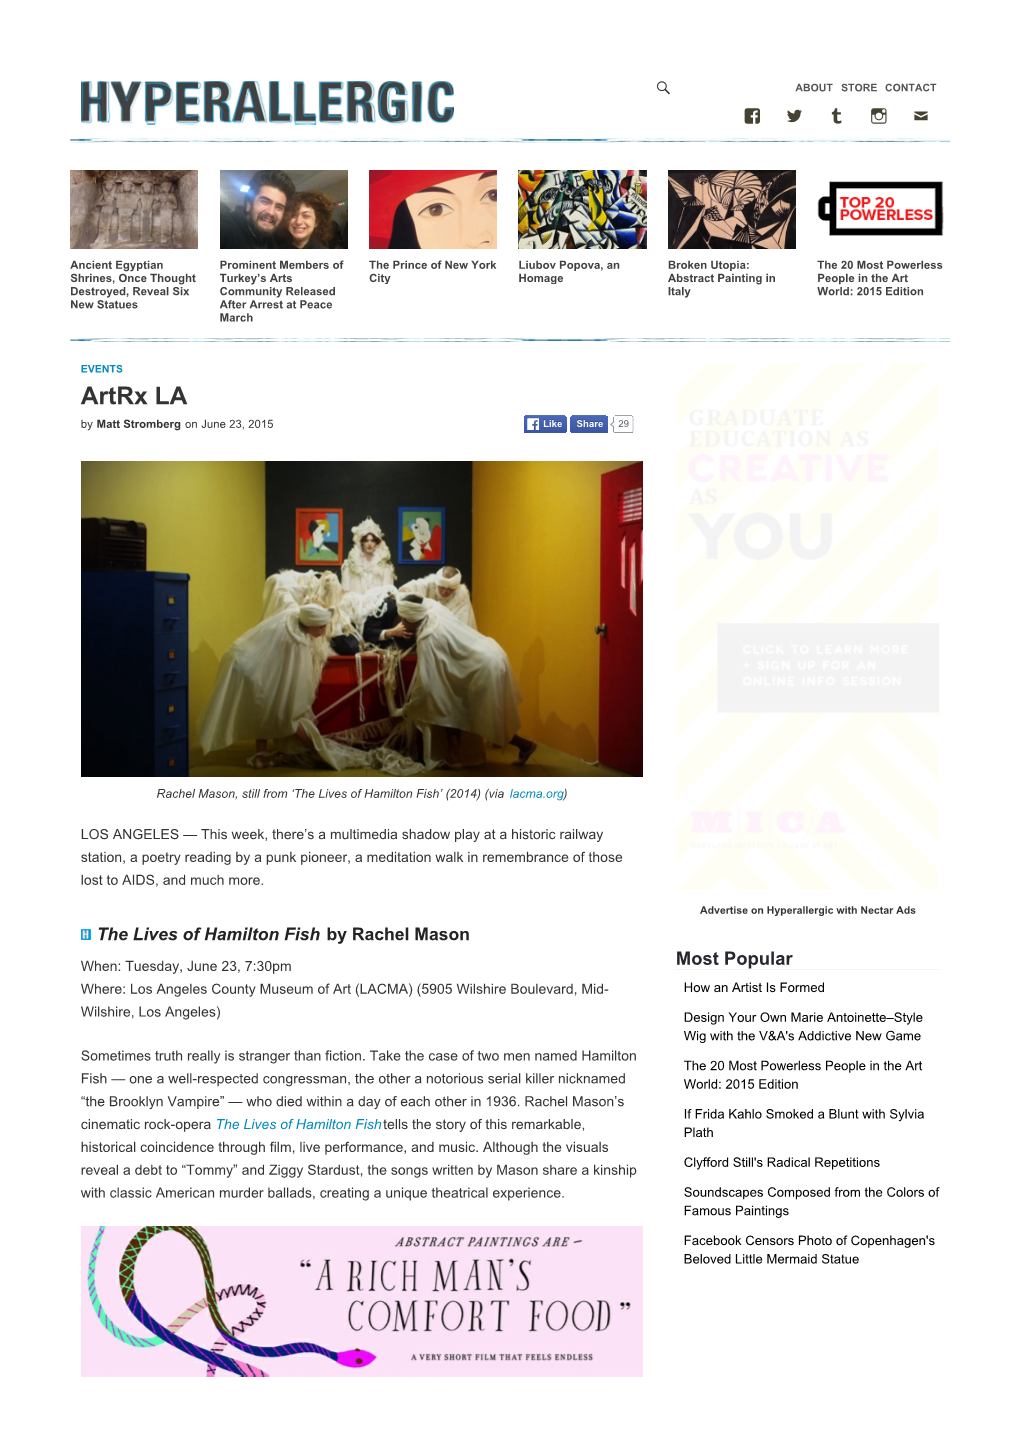 Artrx LA by Matt Stromberg on June 23, 2015 Like Share 29